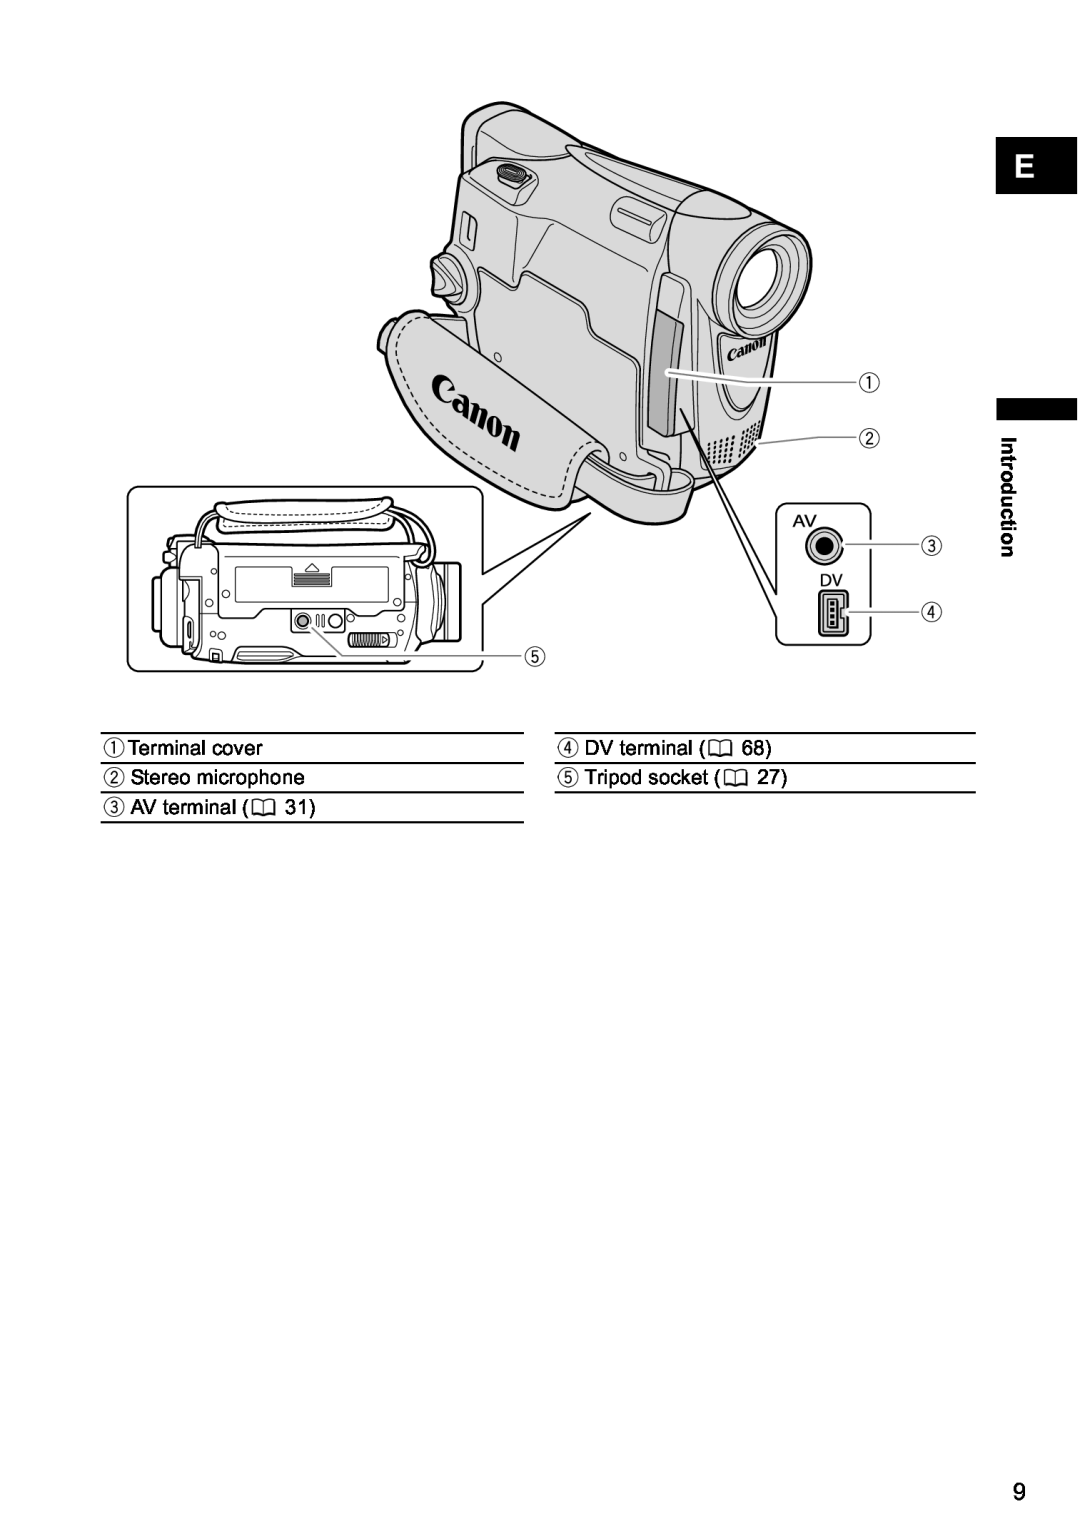 Canon MV790, MV800i instruction manual Terminal cover Stereo microphone AV terminal, DV terminal Tripod socket 